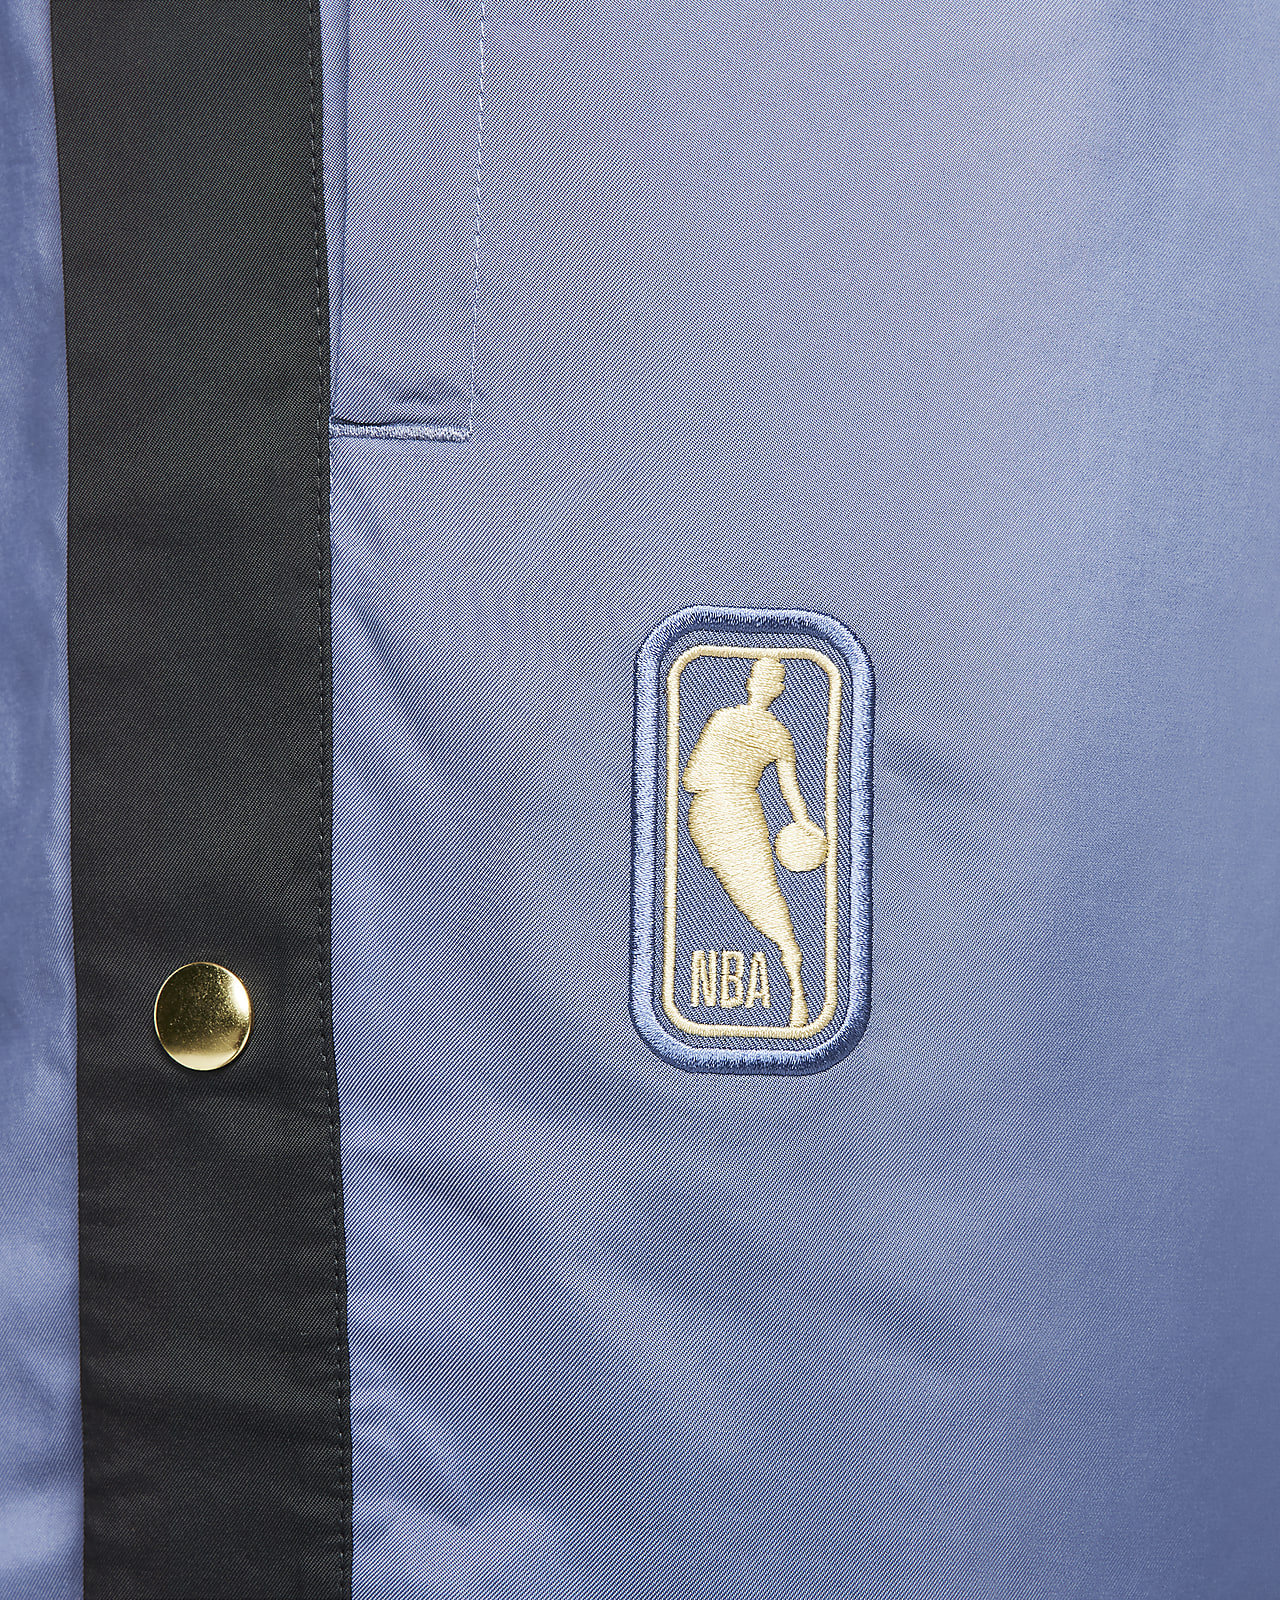 Zipway NBA Men's New York Knicks Pixel Tricot Tear Away Pants